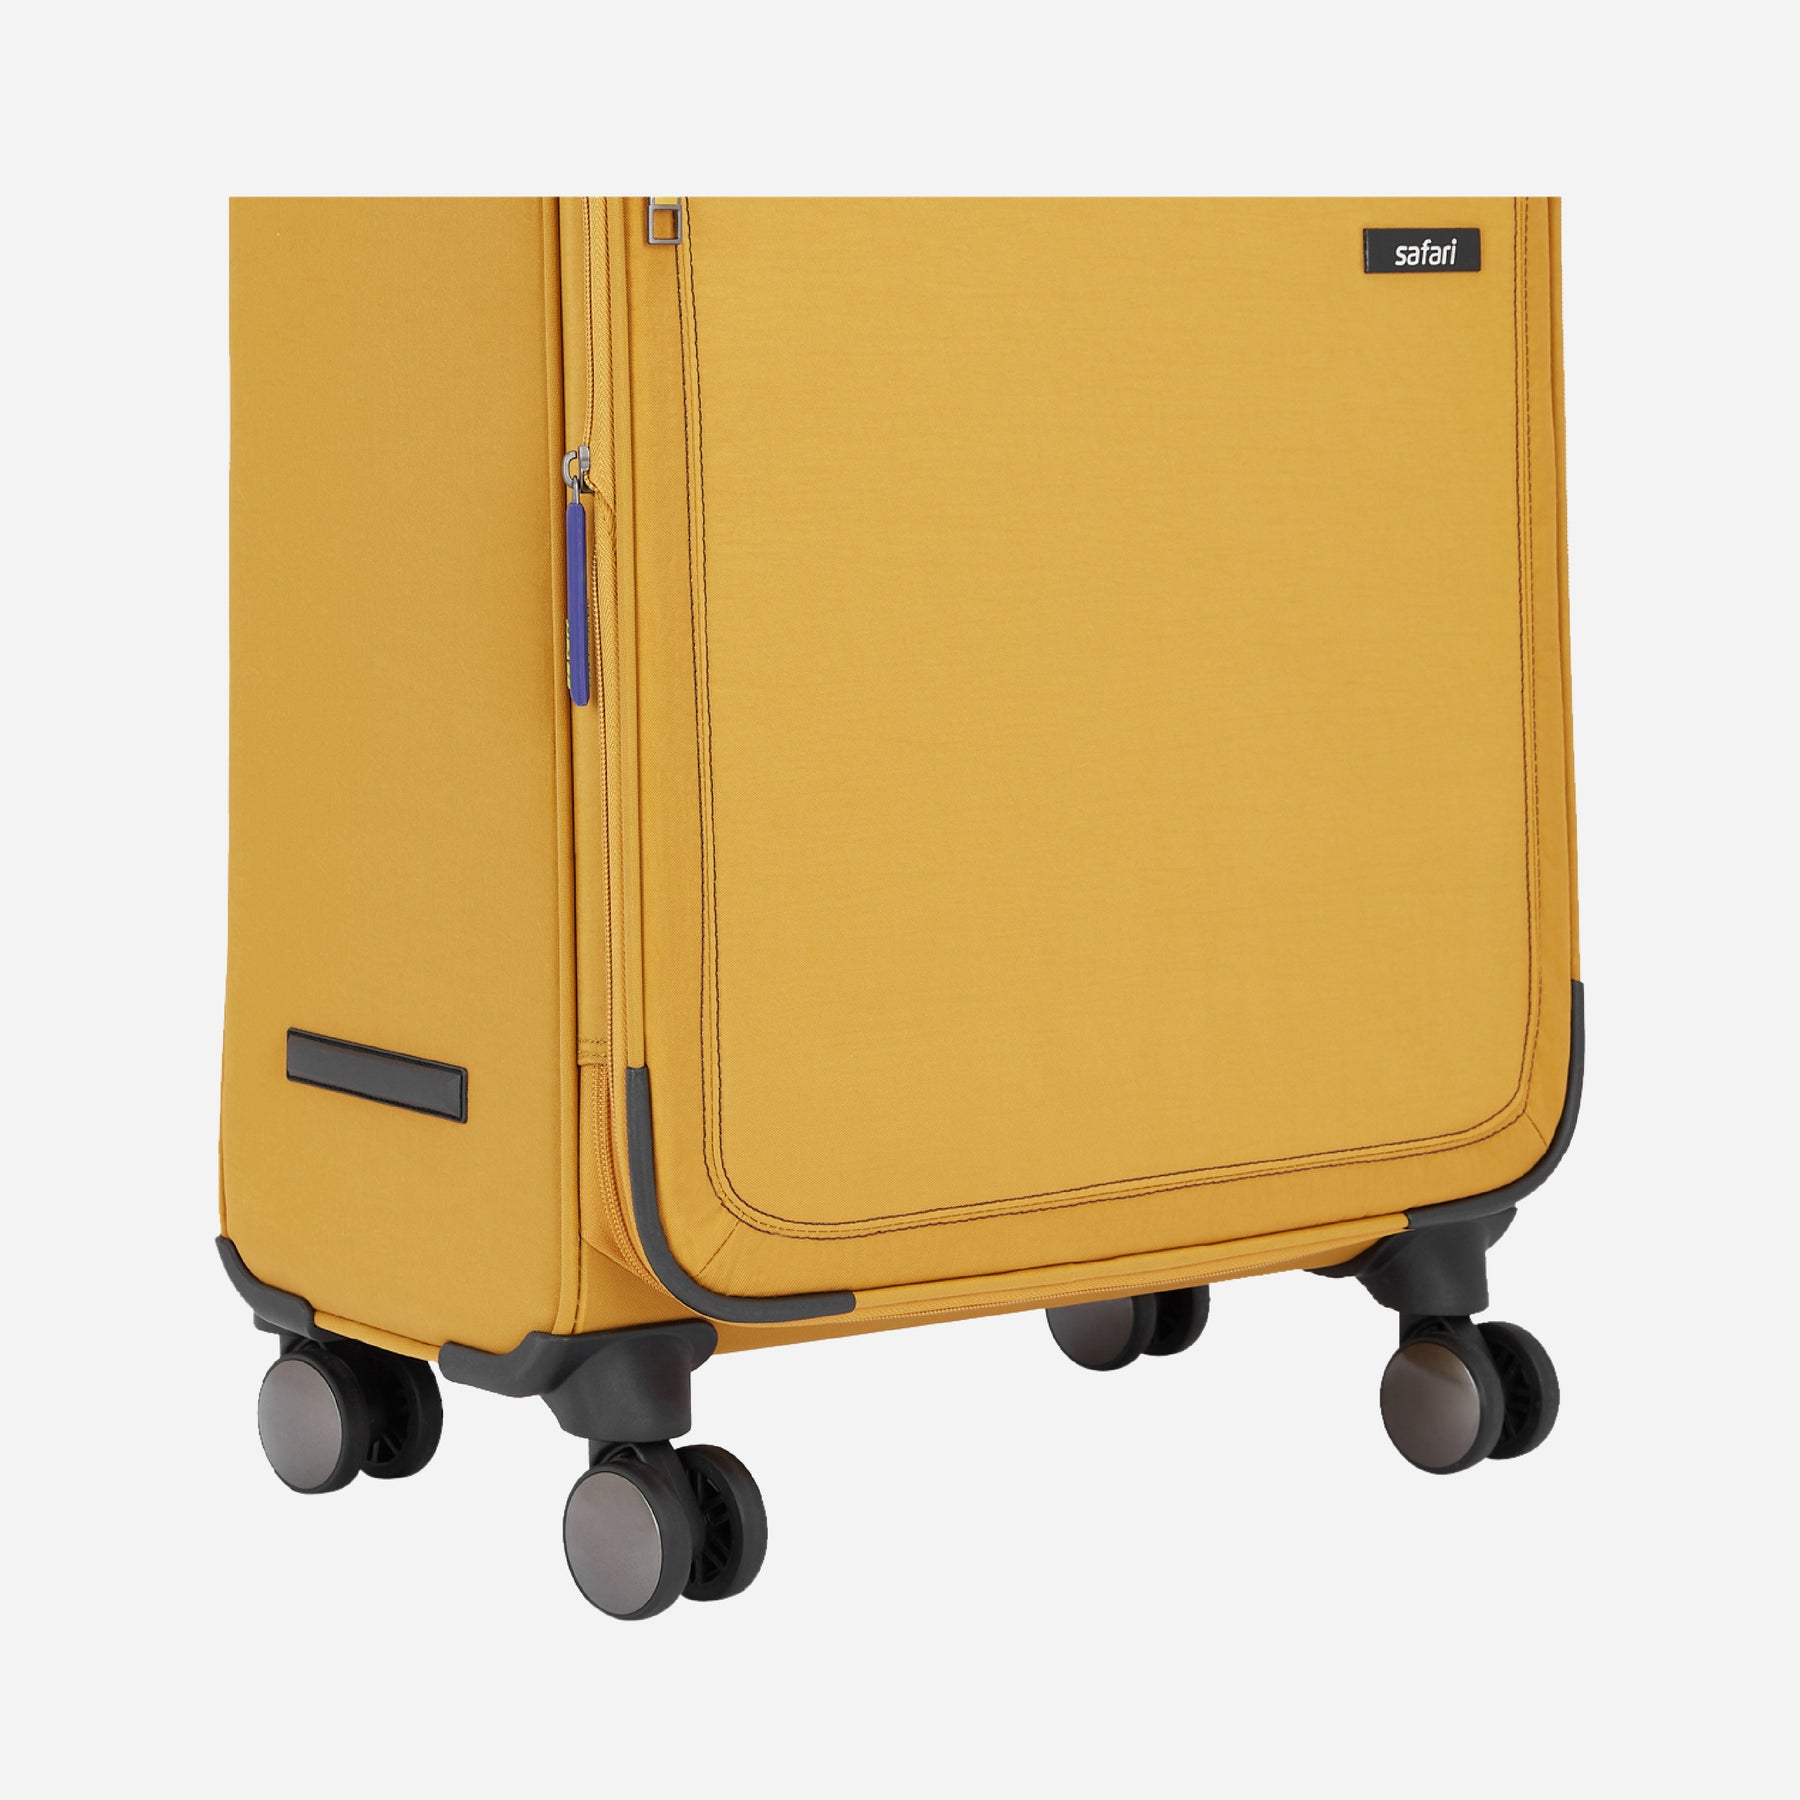 Duvet Anti Theft Soft Luggage with Premium Fabric, TSA lock, Securi Zipper and Dual Wheels - Yellow